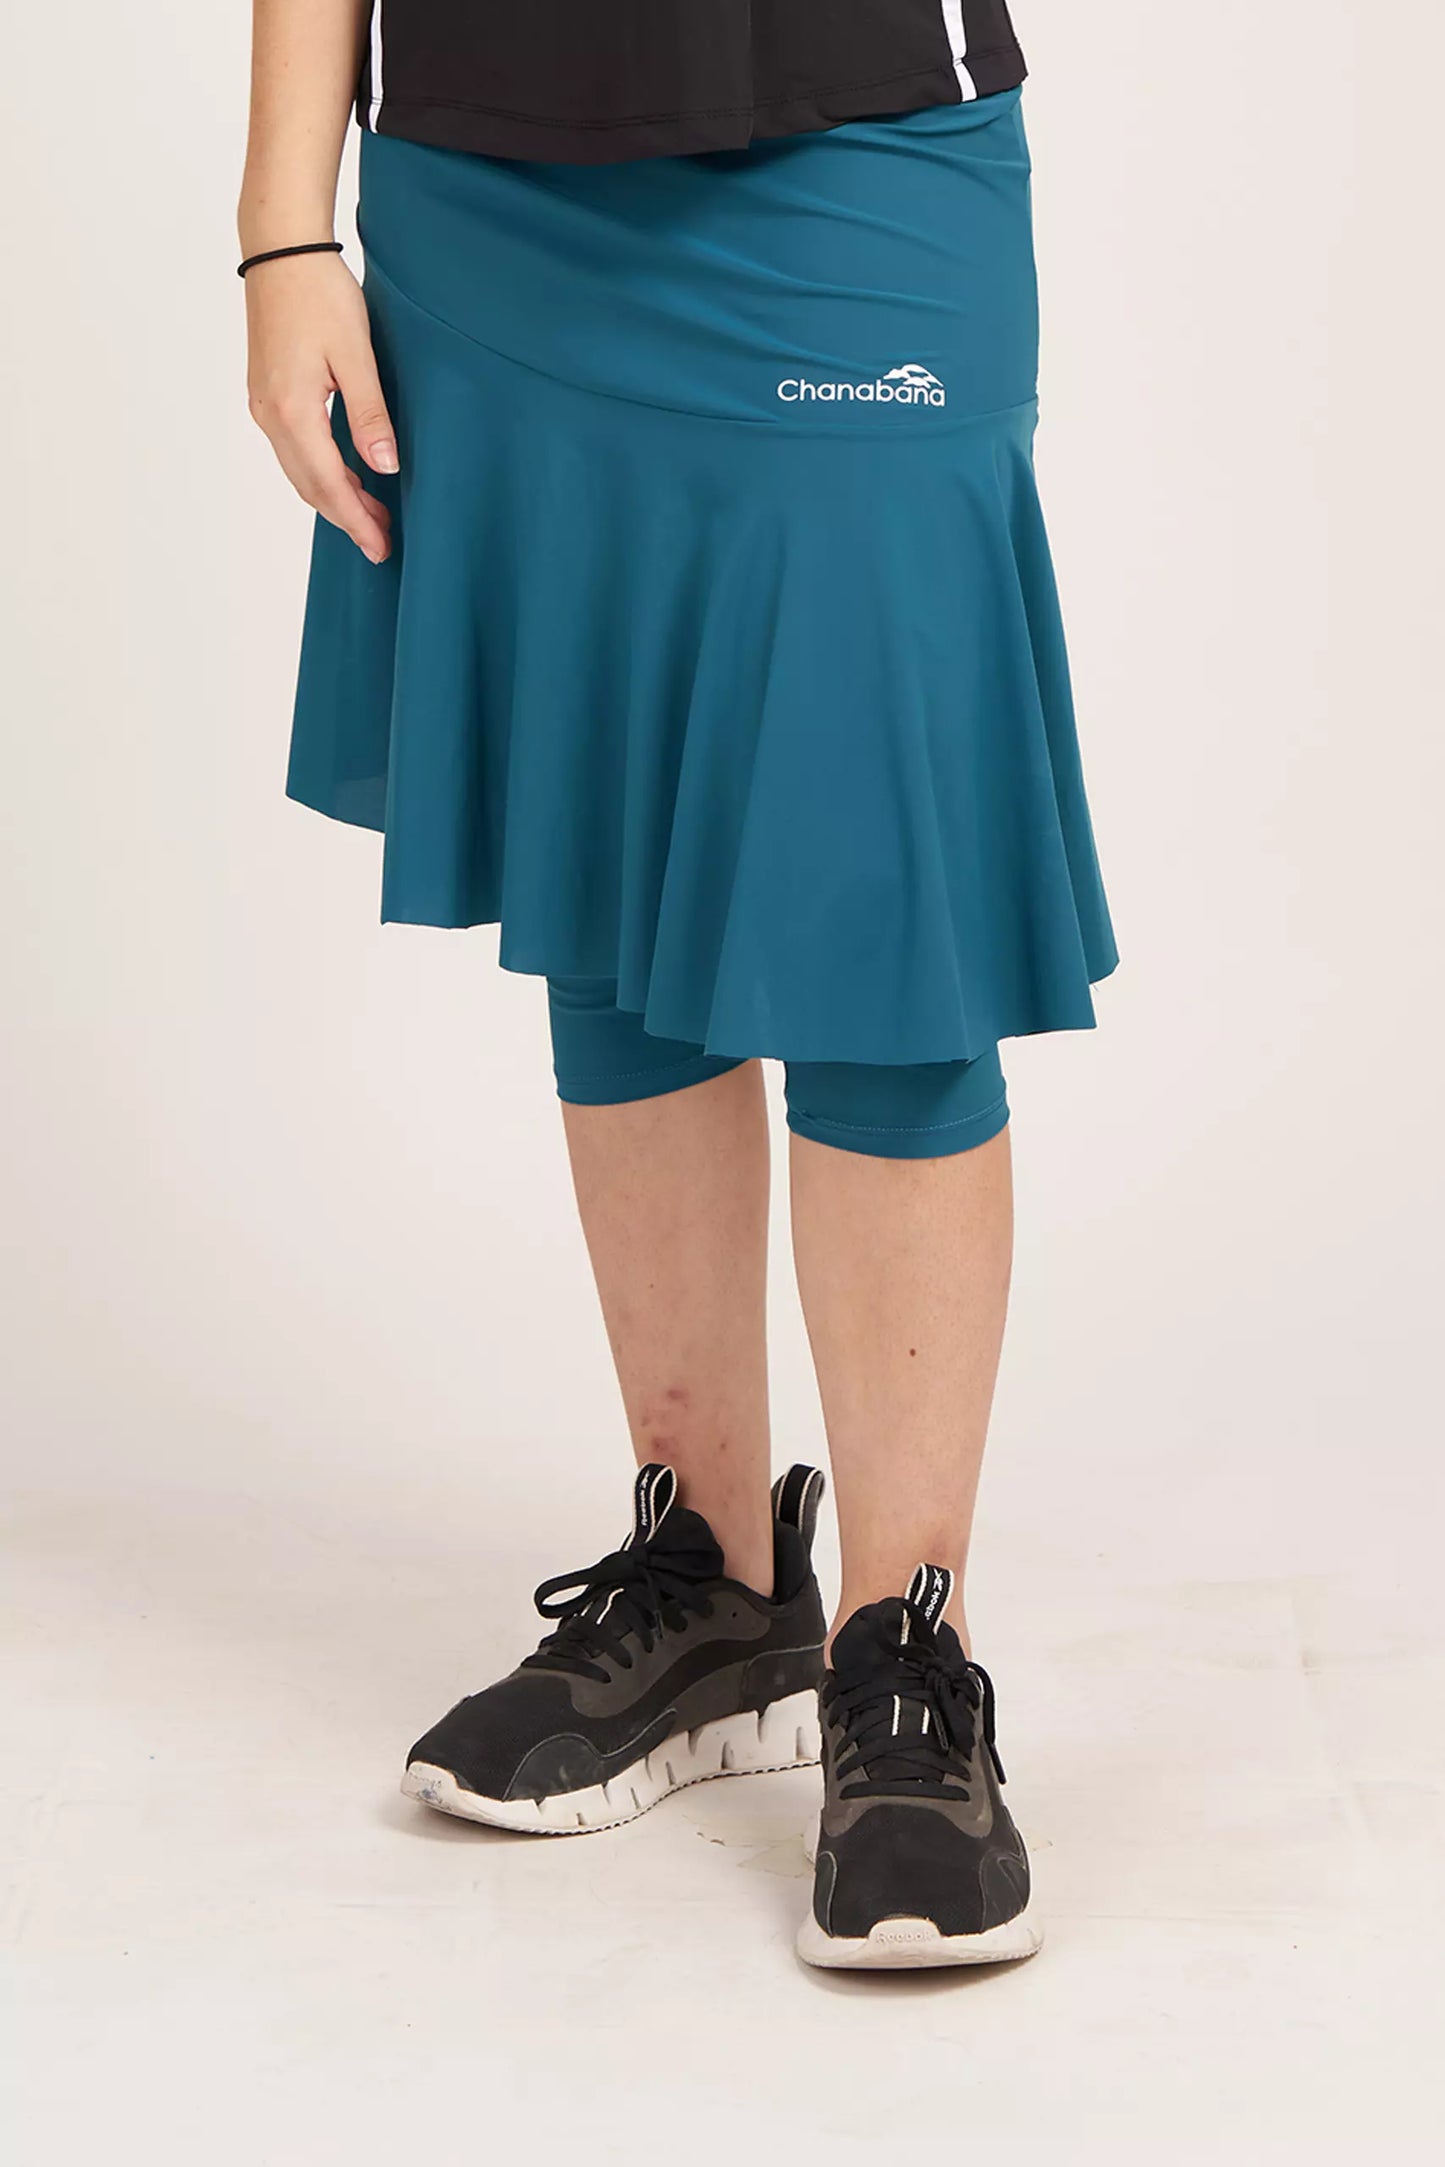 Tennis Flair Skirt - Teal